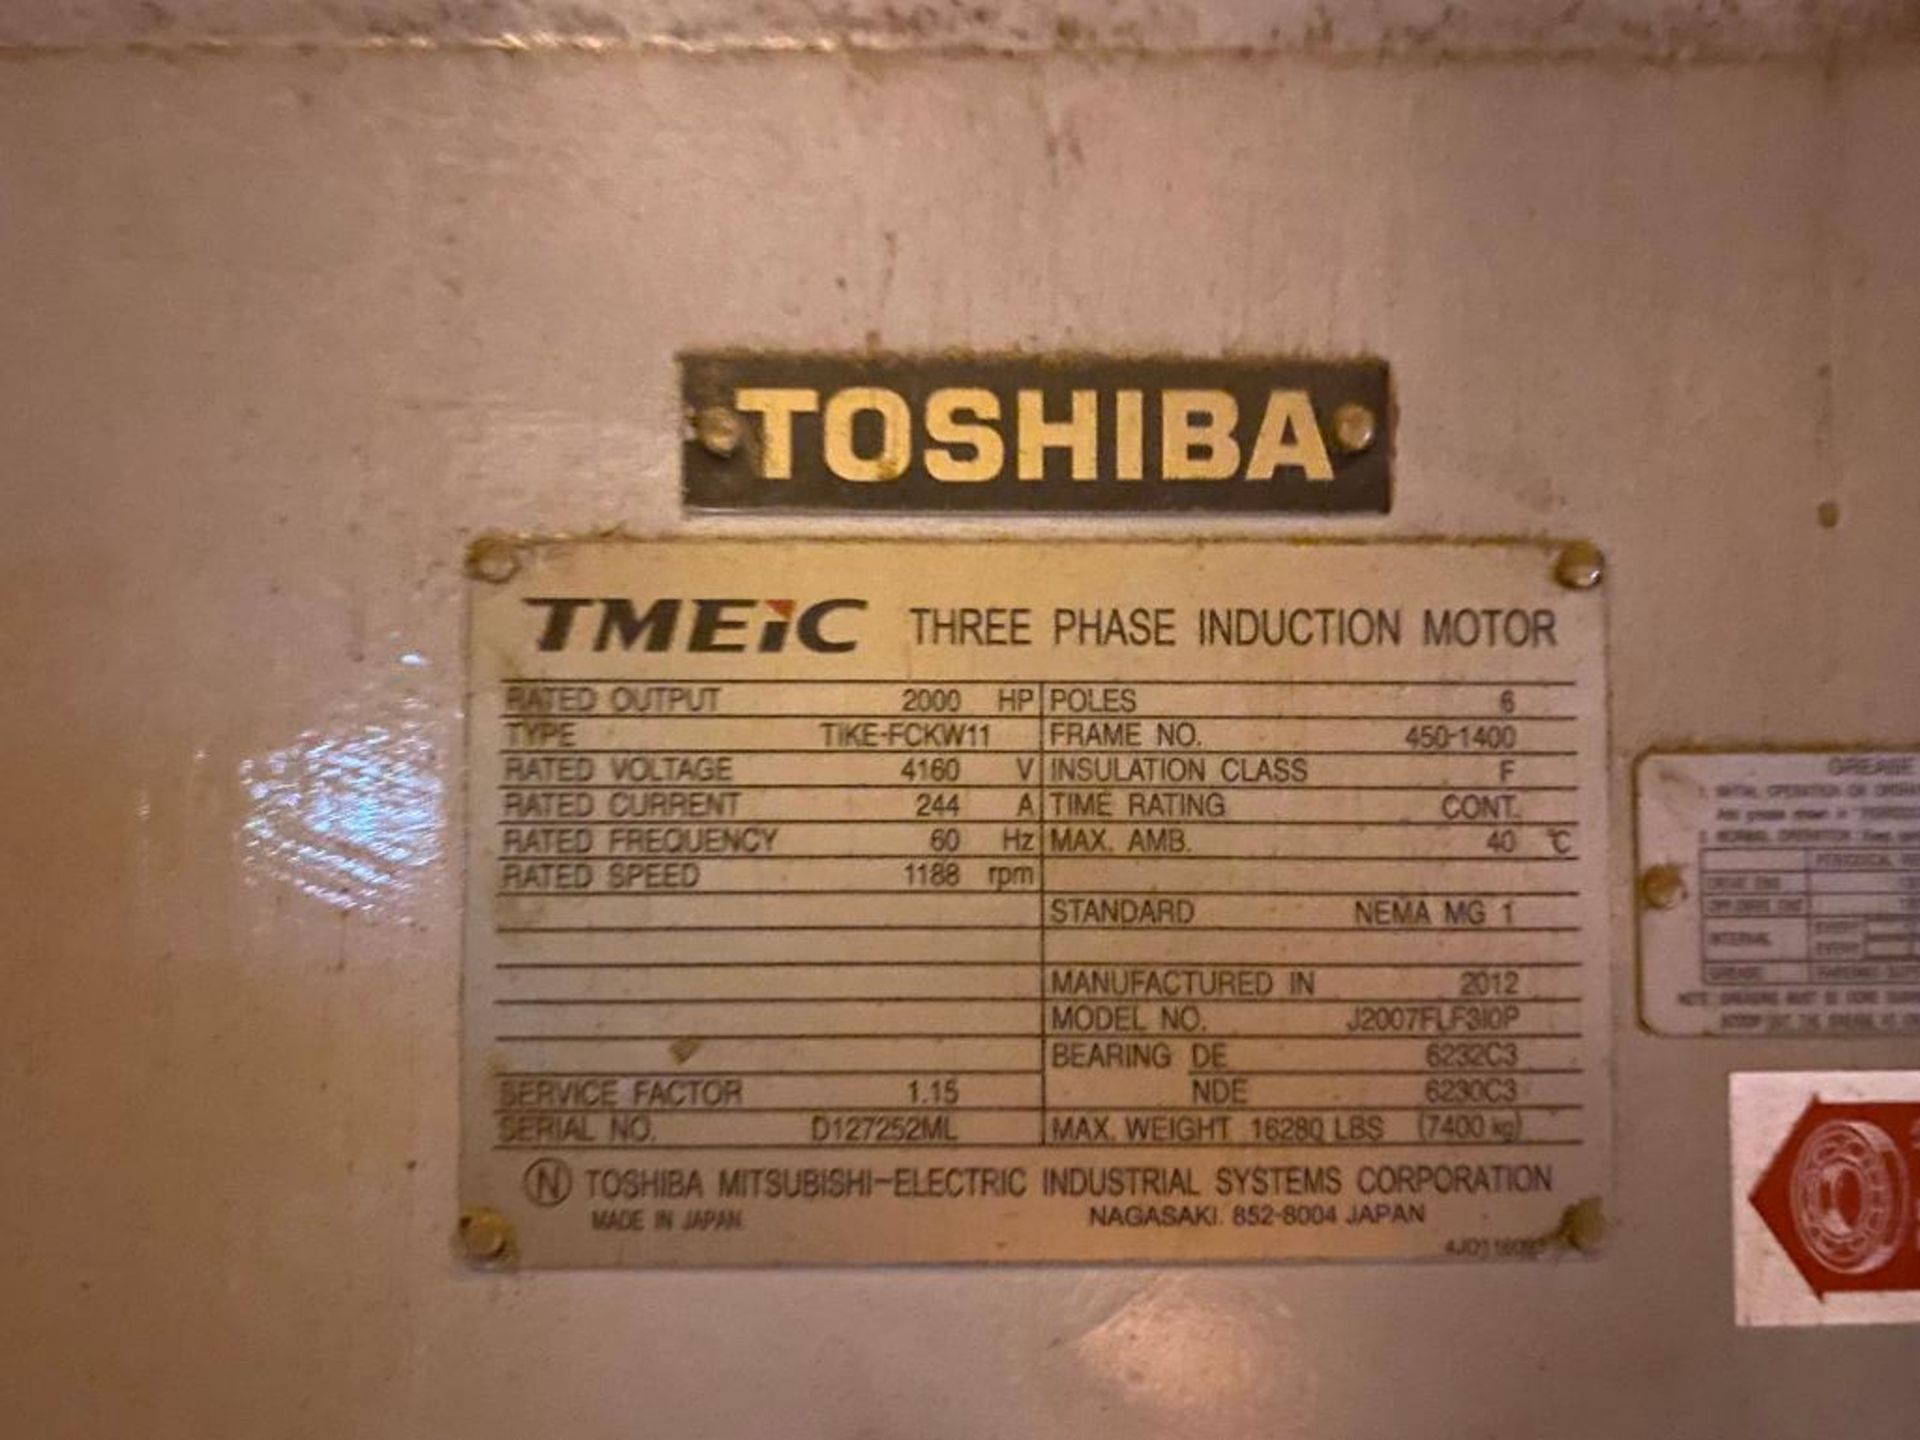 Toshiba TMEIC 2000 HP Electric Motor, Rated Voltage 4160, 1188 RPM, 60 Hz, Type TIKE-FCKW11, Frame 4 - Bild 2 aus 3